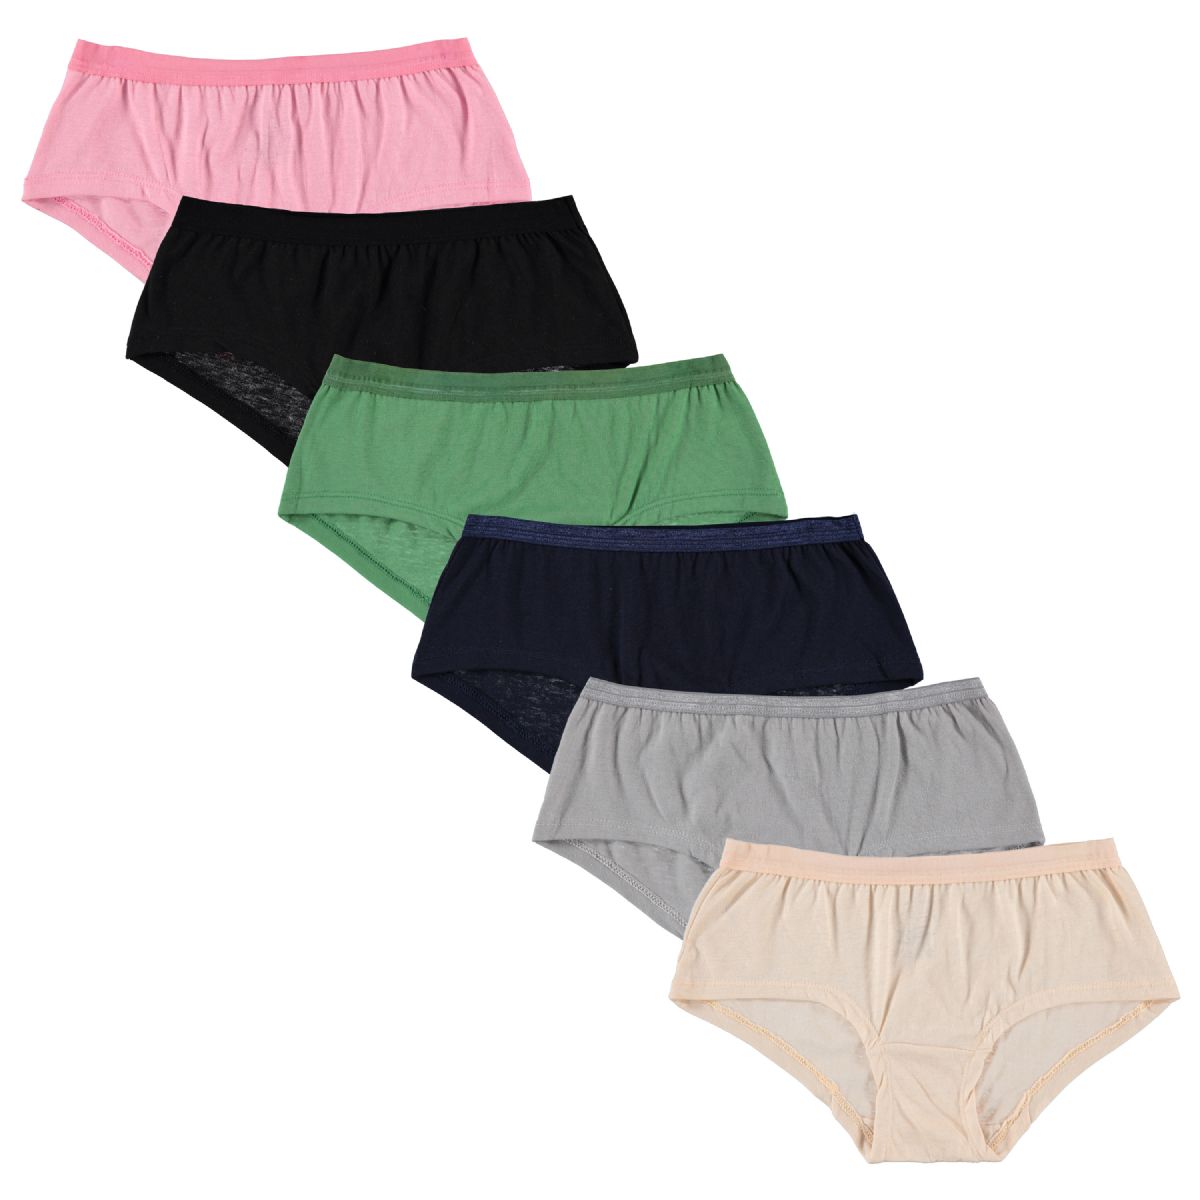 150 Pairs Women's Brown Cotton Panty, Size 8 - Womens Panties & Underwear -  at 